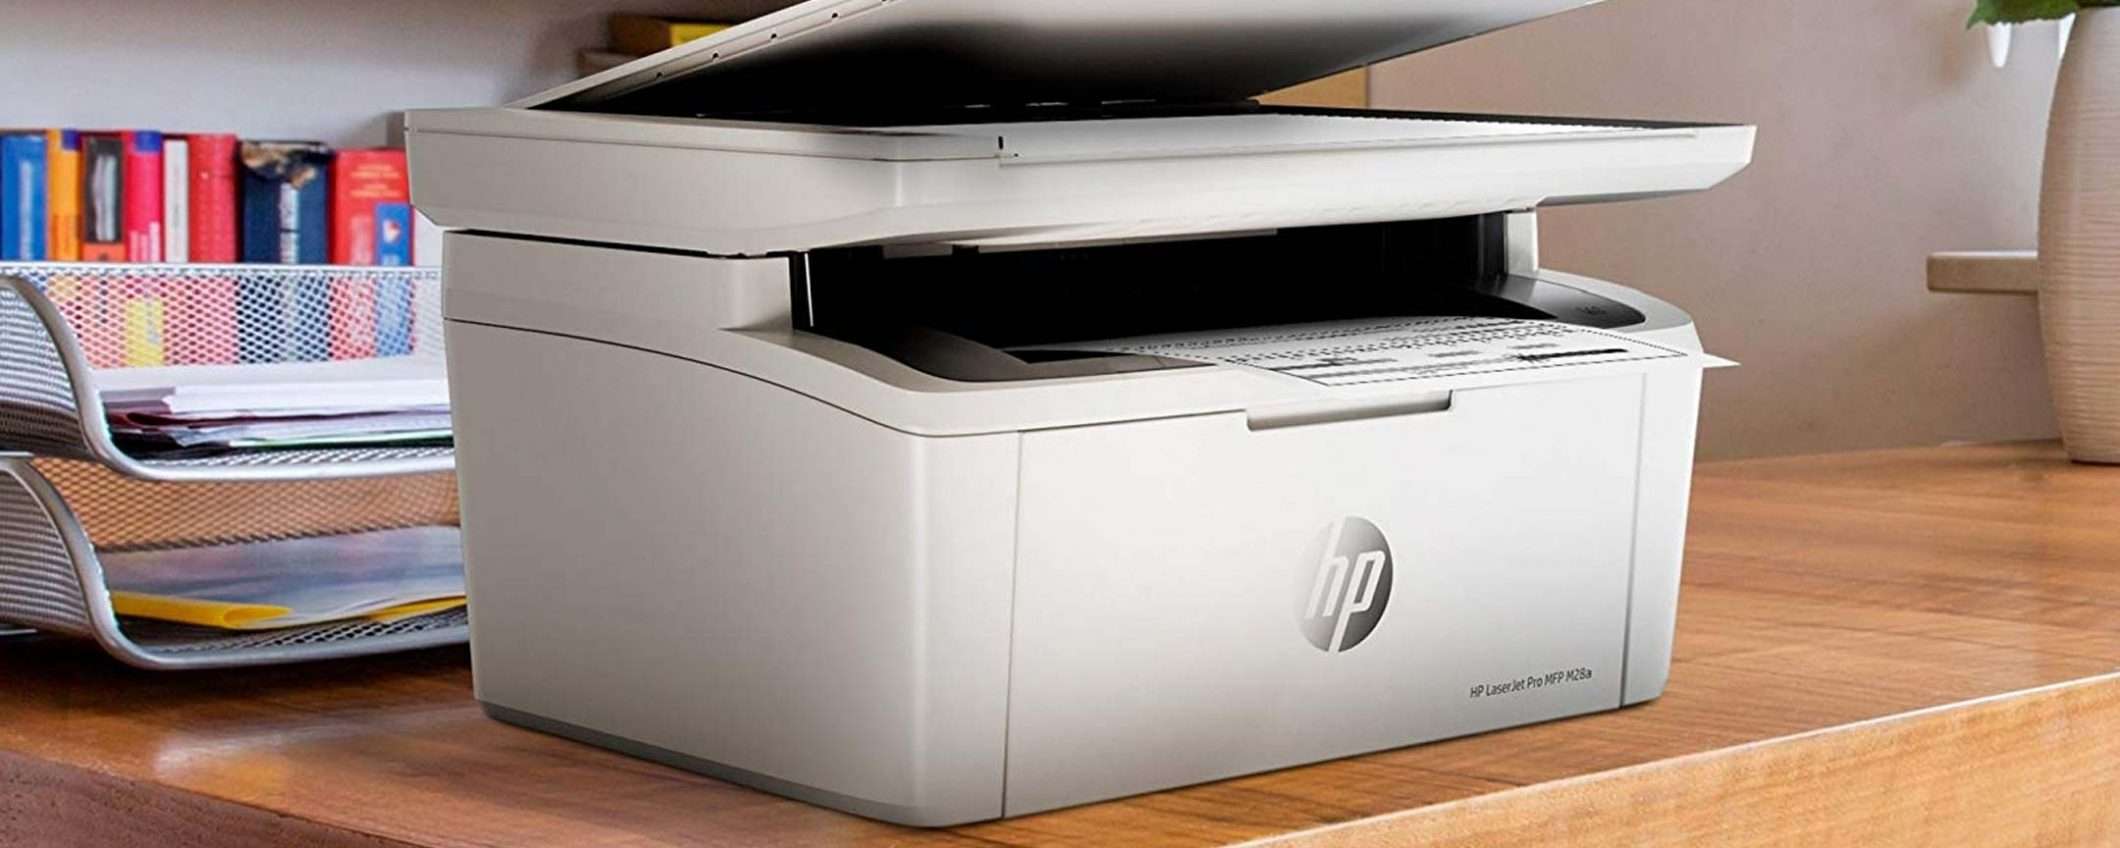 Offerte eBay: stampante HP LaserJet Pro MFP M28a